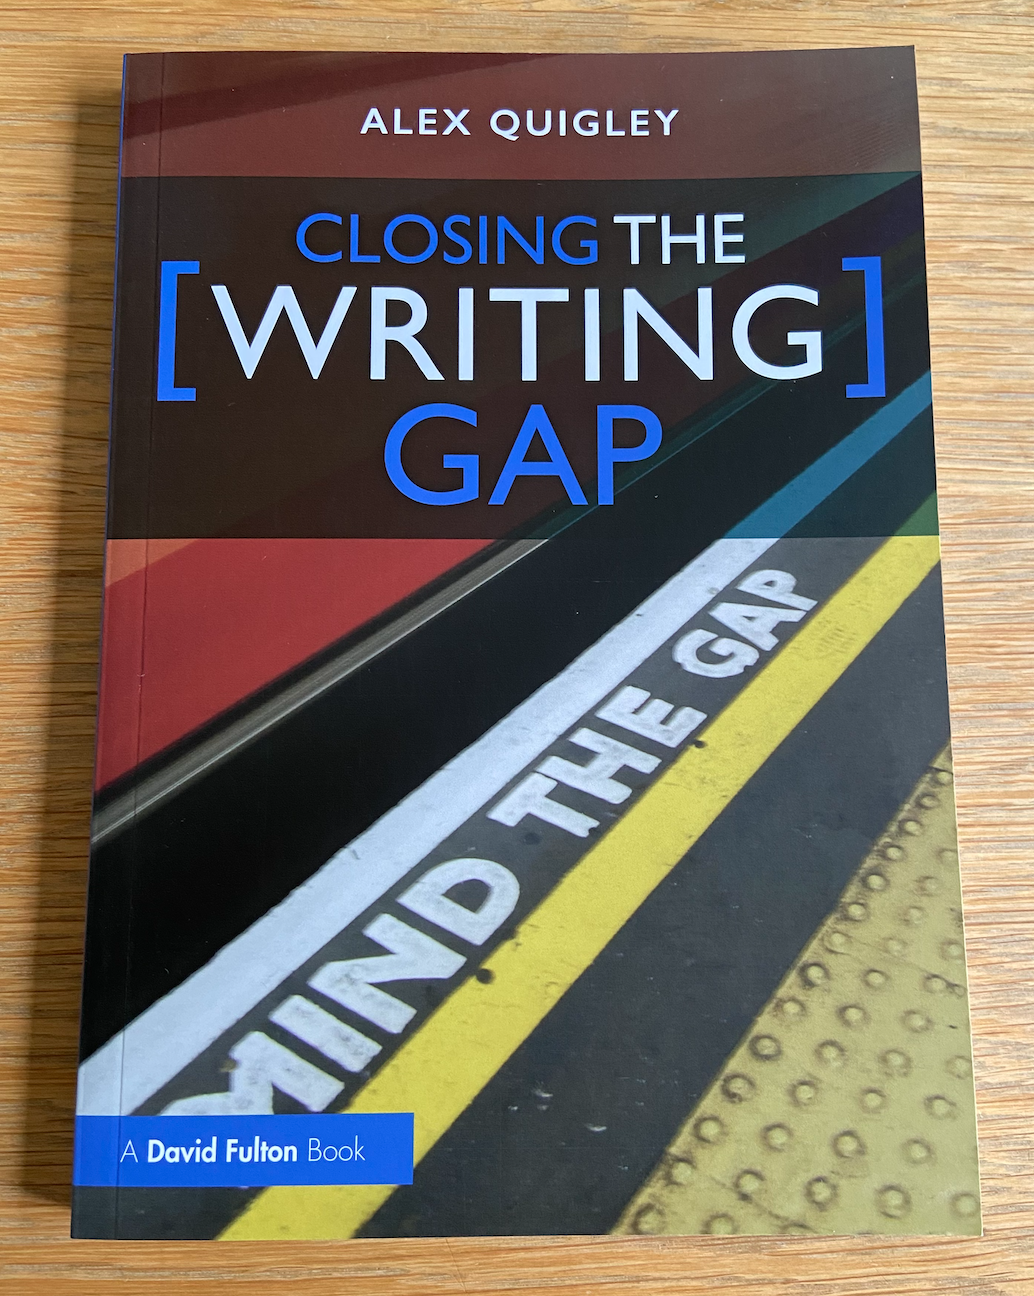 Introducing… Closing the Writing Gap